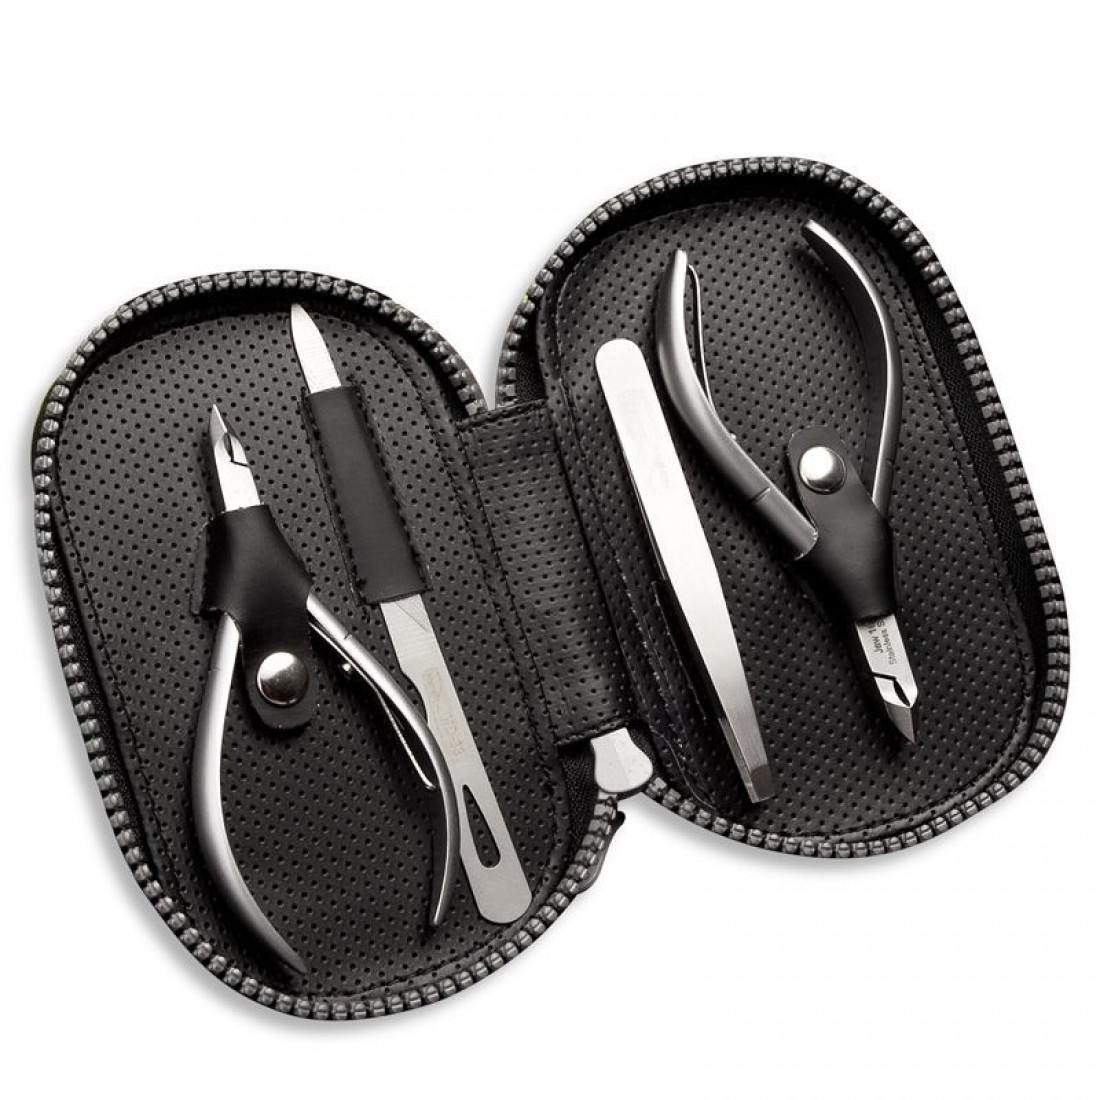 Nghia Export Professional manicure-pedicure tool set MD-33 - 0122806 SCISSORS-CUTICLE NIPPERS-KIT